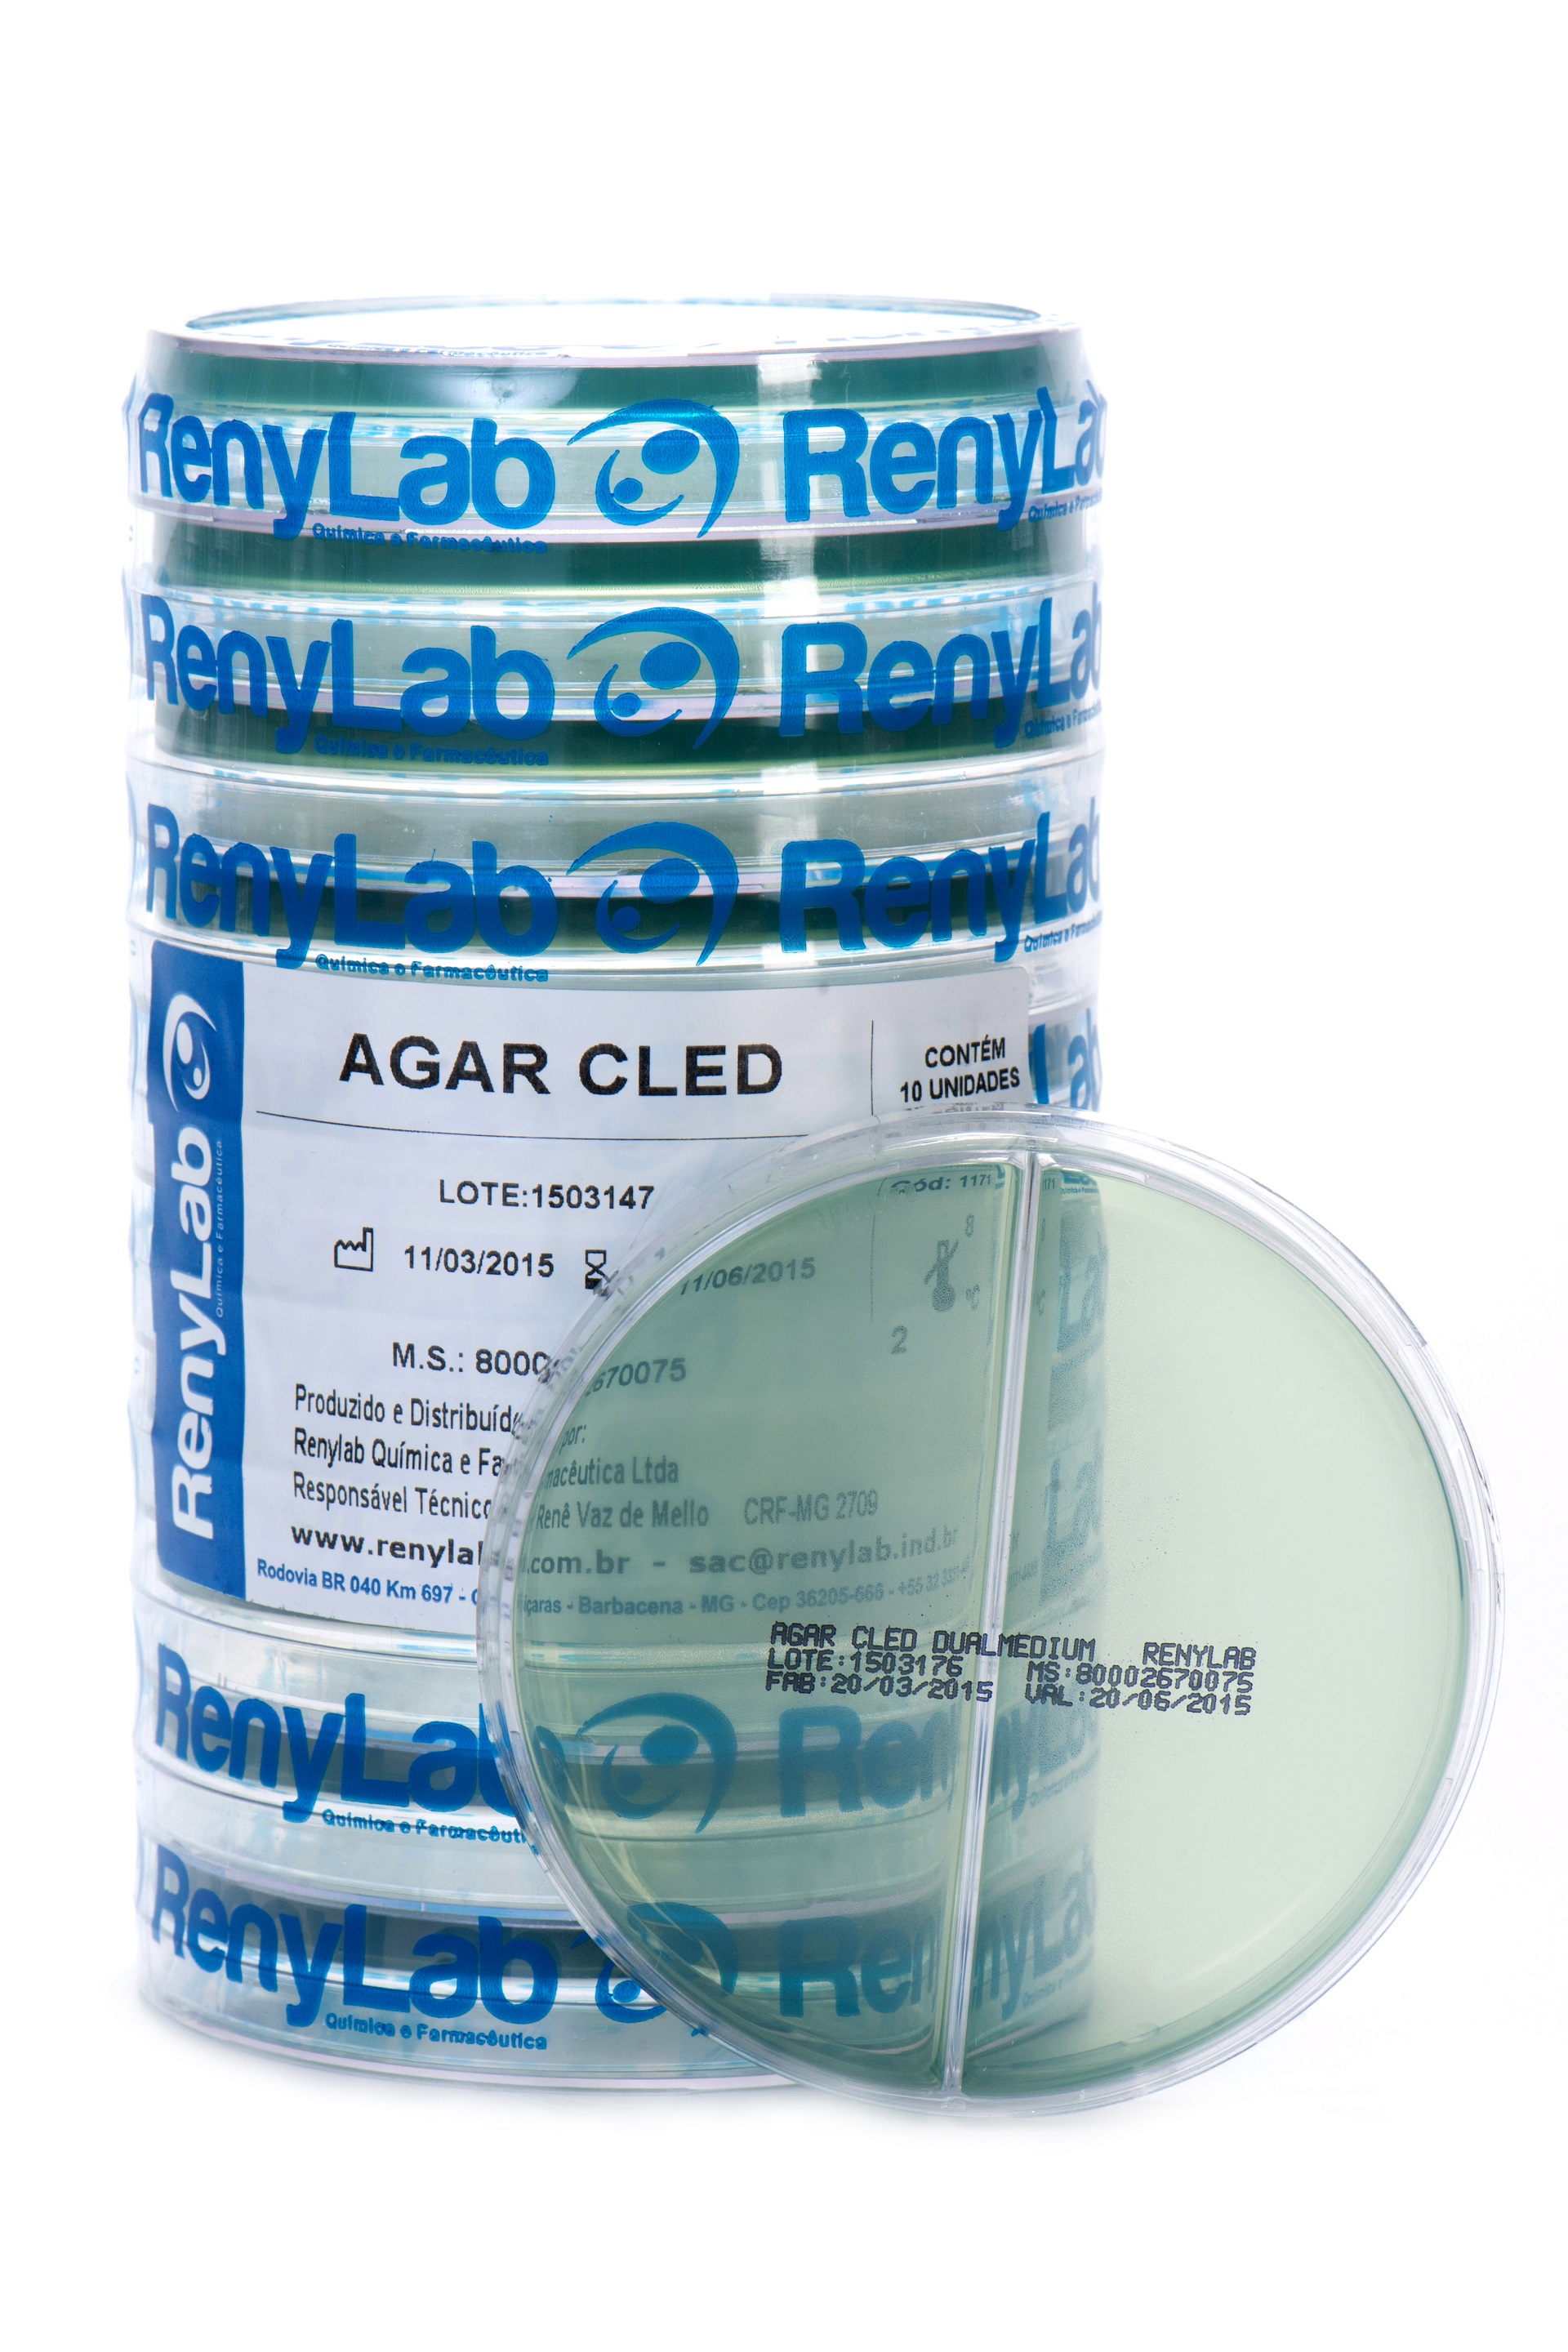 Agar Cled/Cled